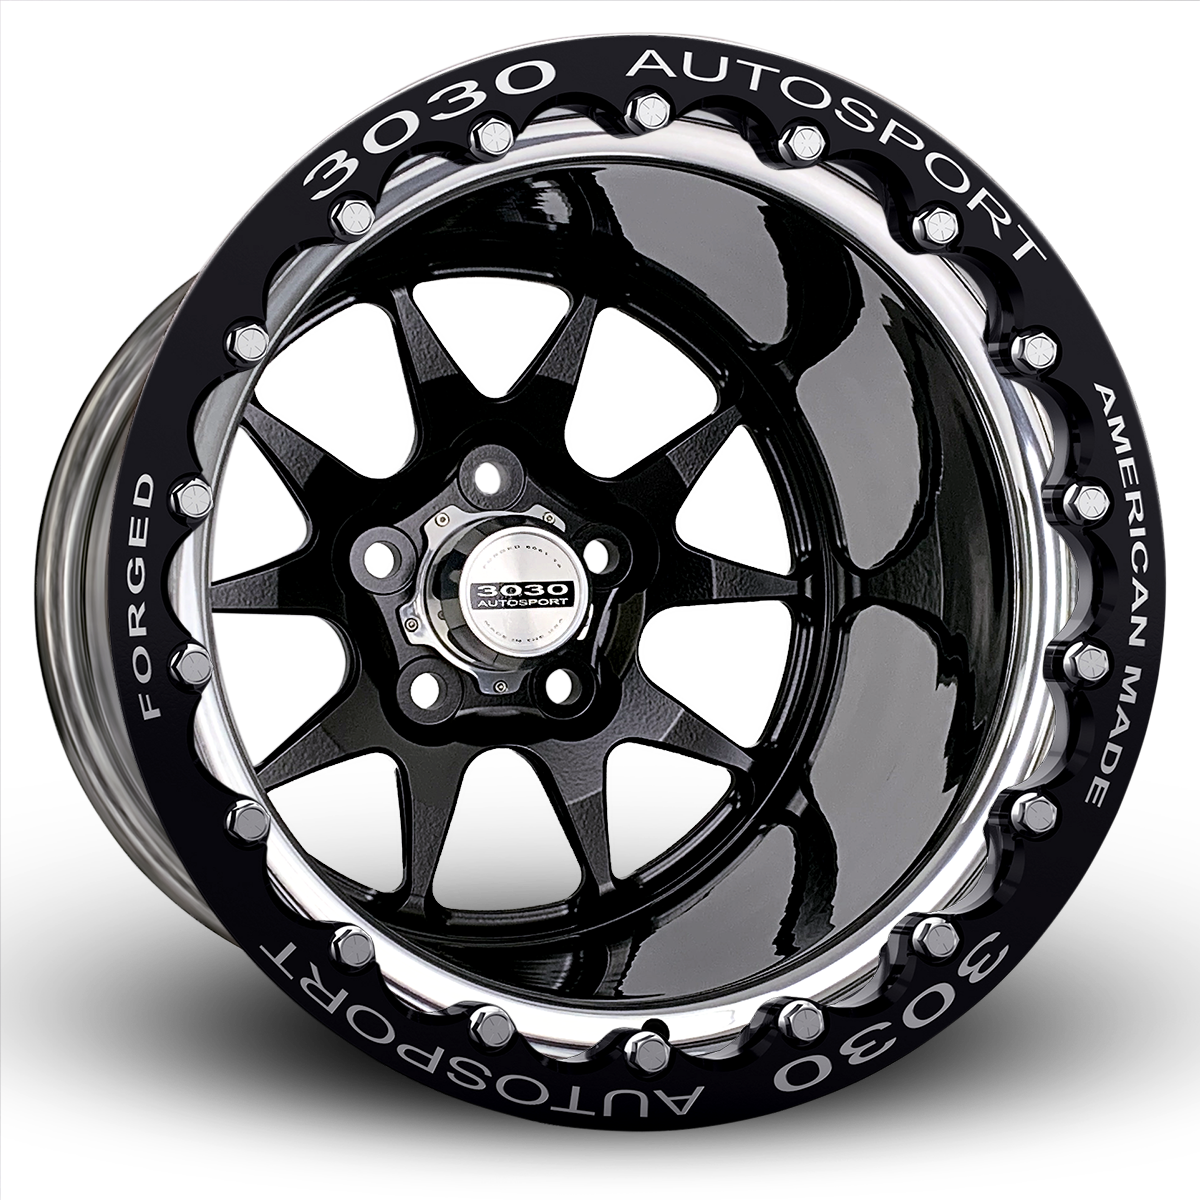 MACH-10 Double-Beadlock Wheel, Size: 15x9", Bolt Pattern: 5x4.75", Backspace: 4.500" [Black/Polished]